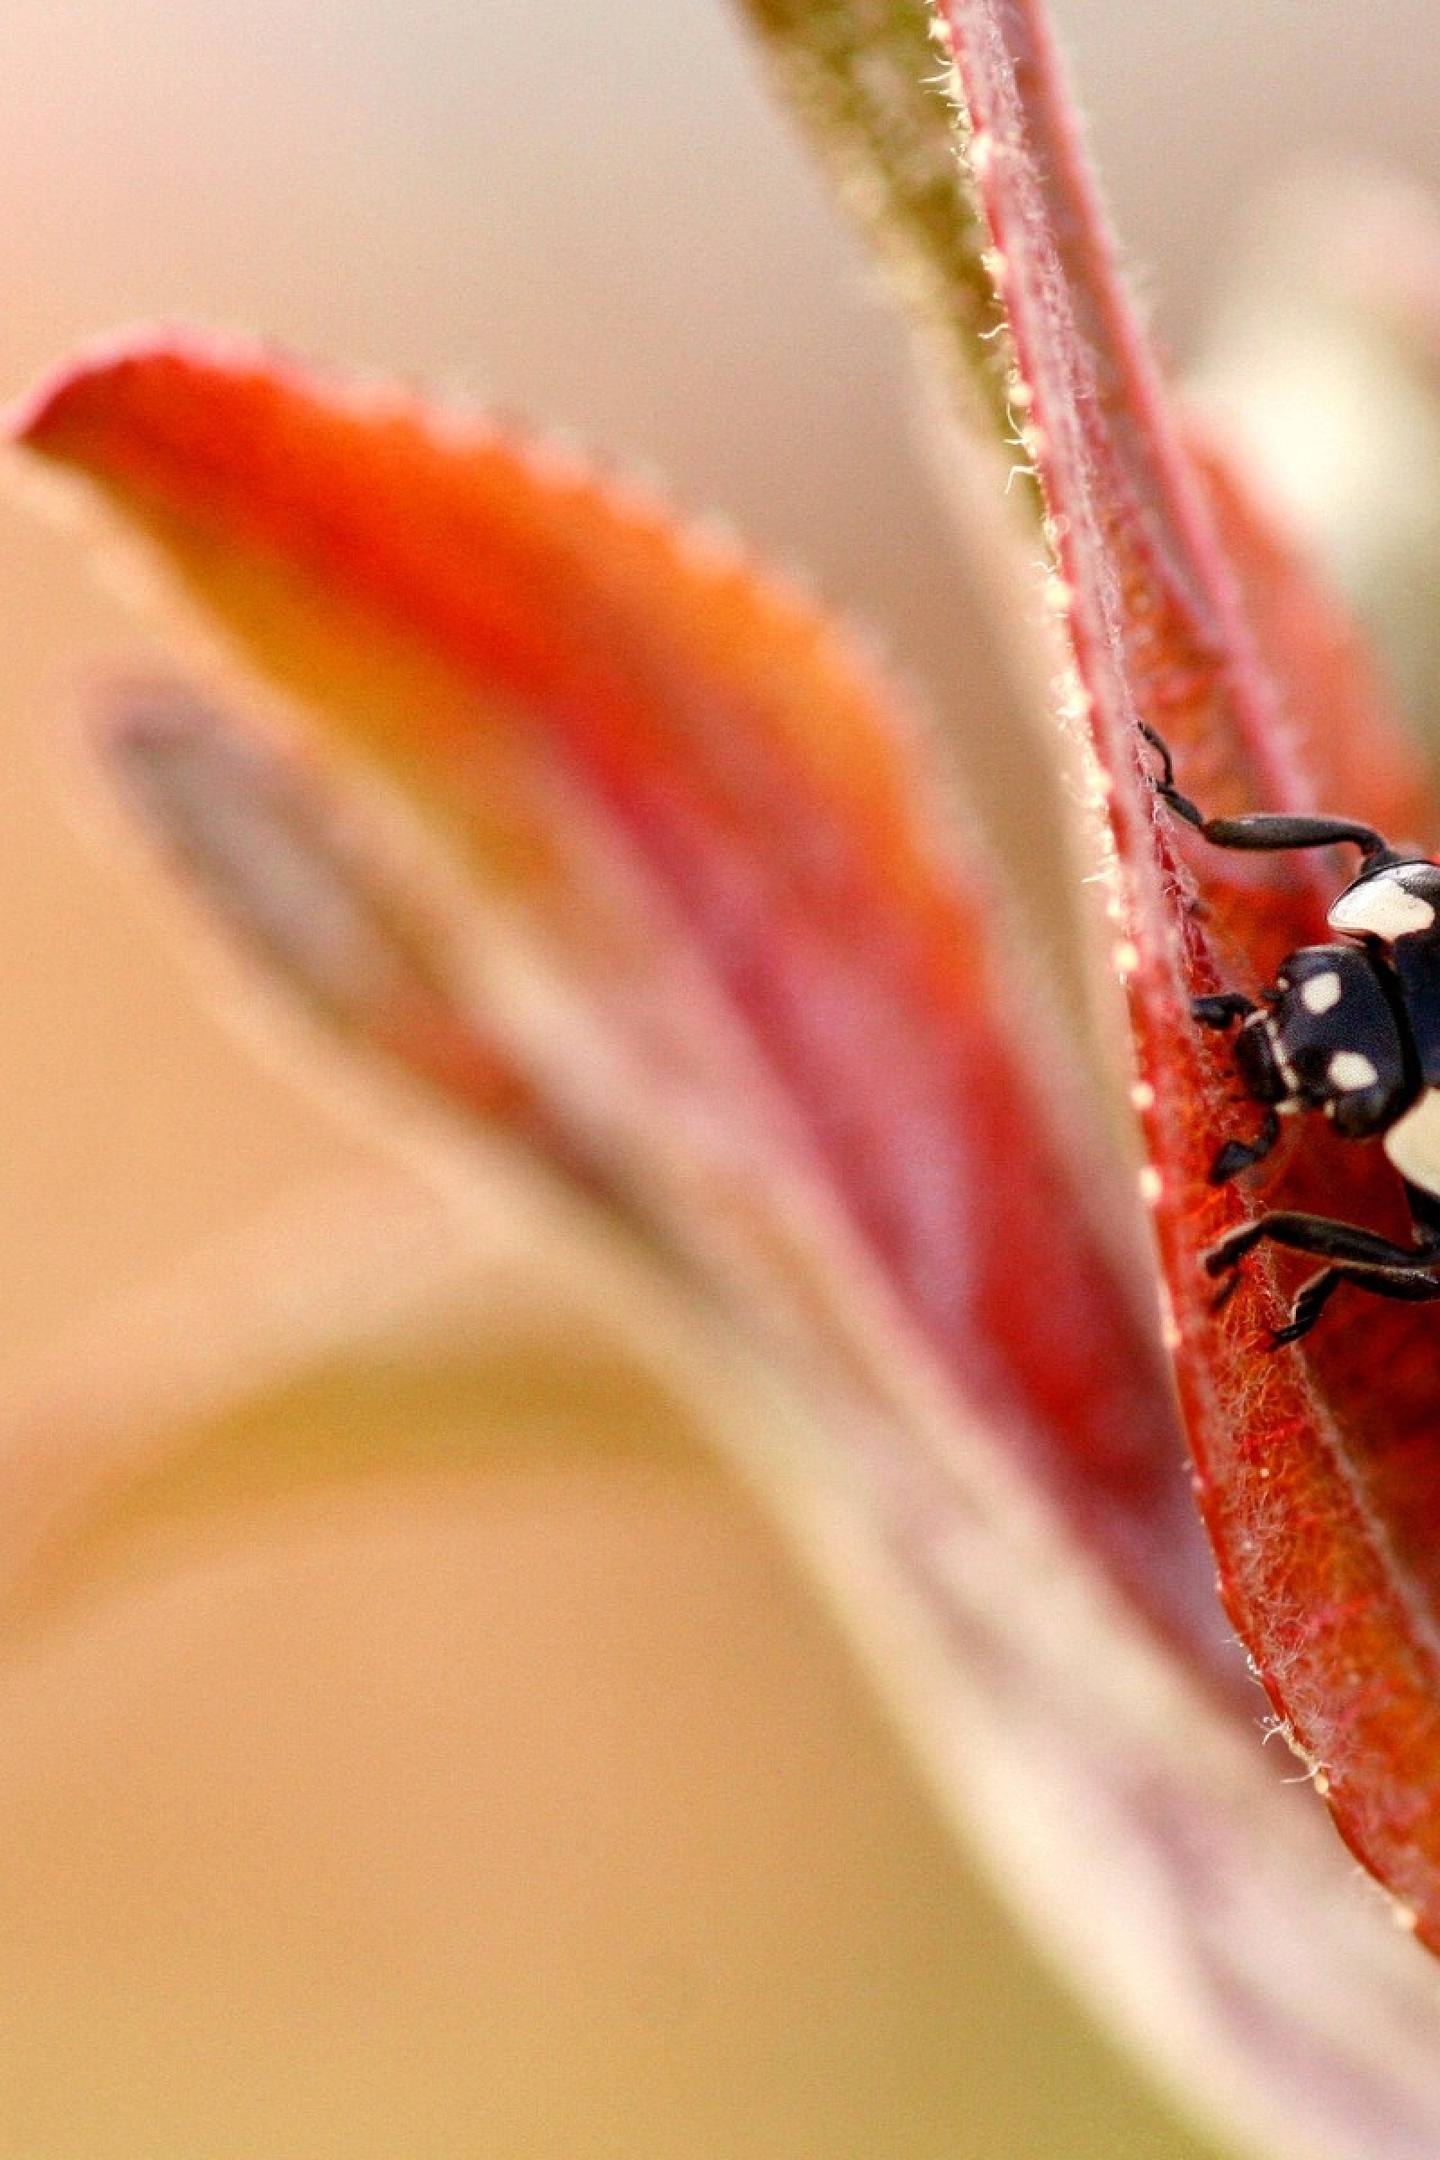 Image: Ladybug, red, spots, leaf, macro, background, blur